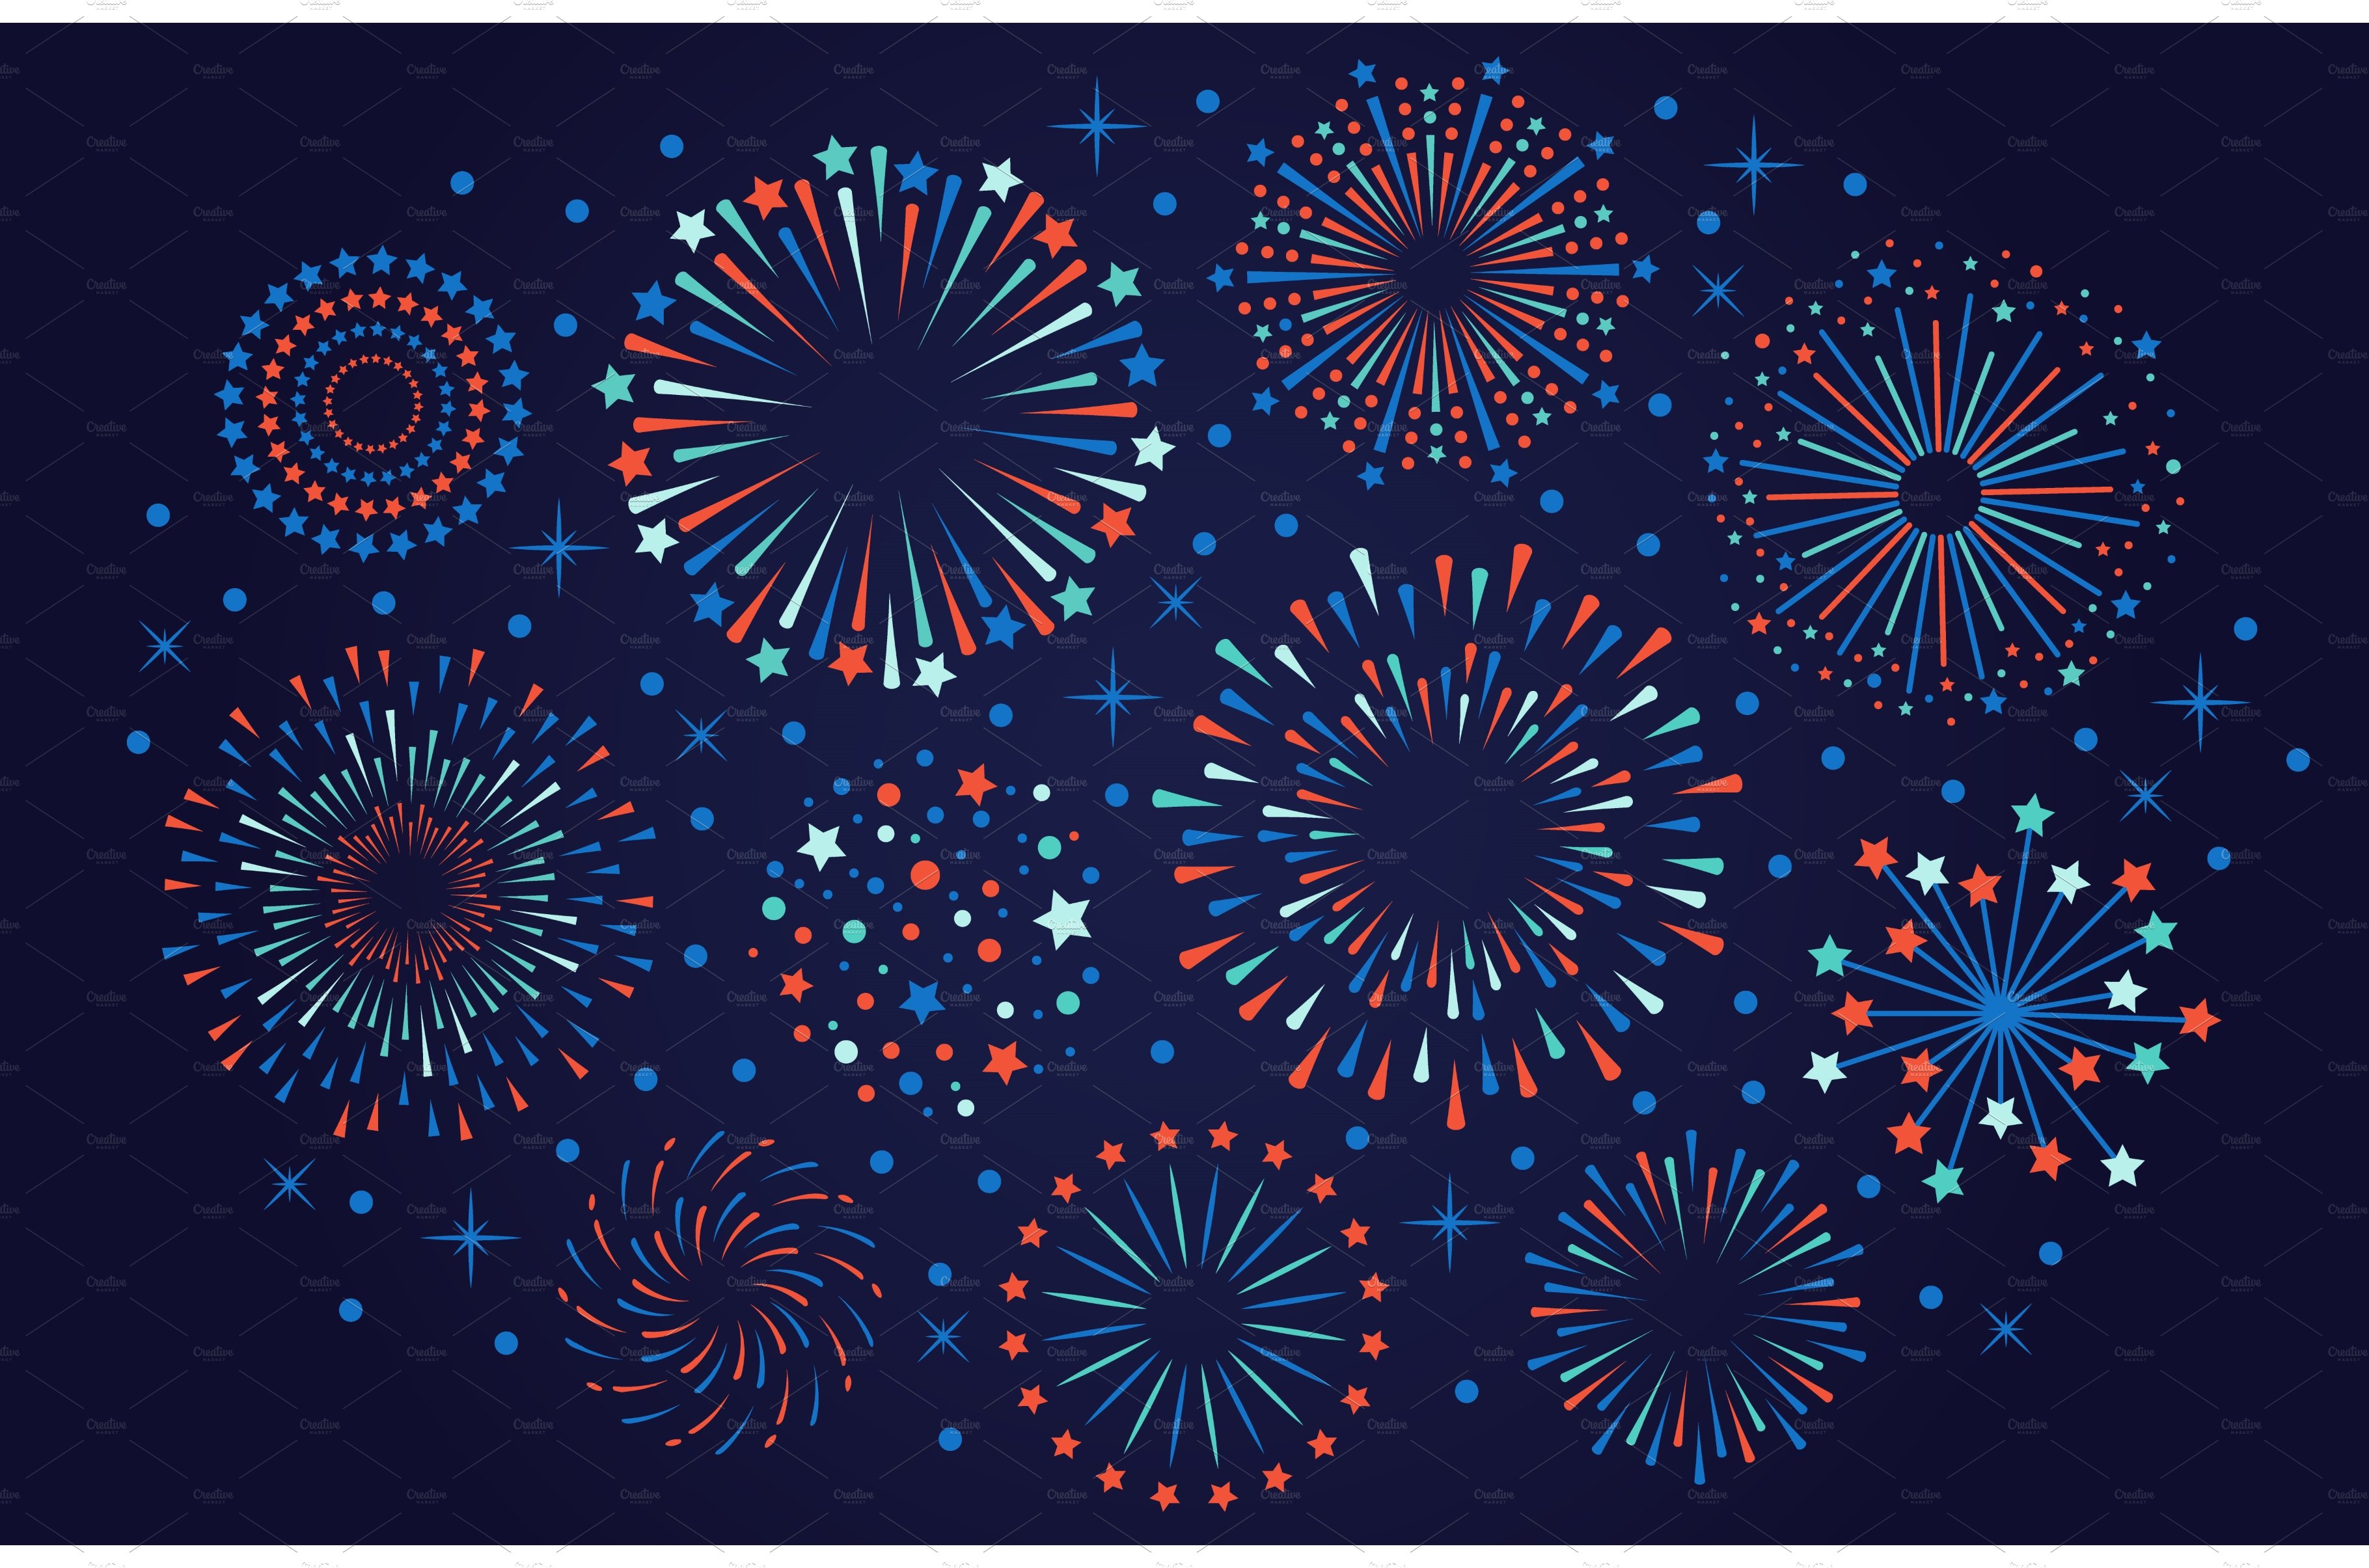 Celebration 4th July USA fireworks cover image.